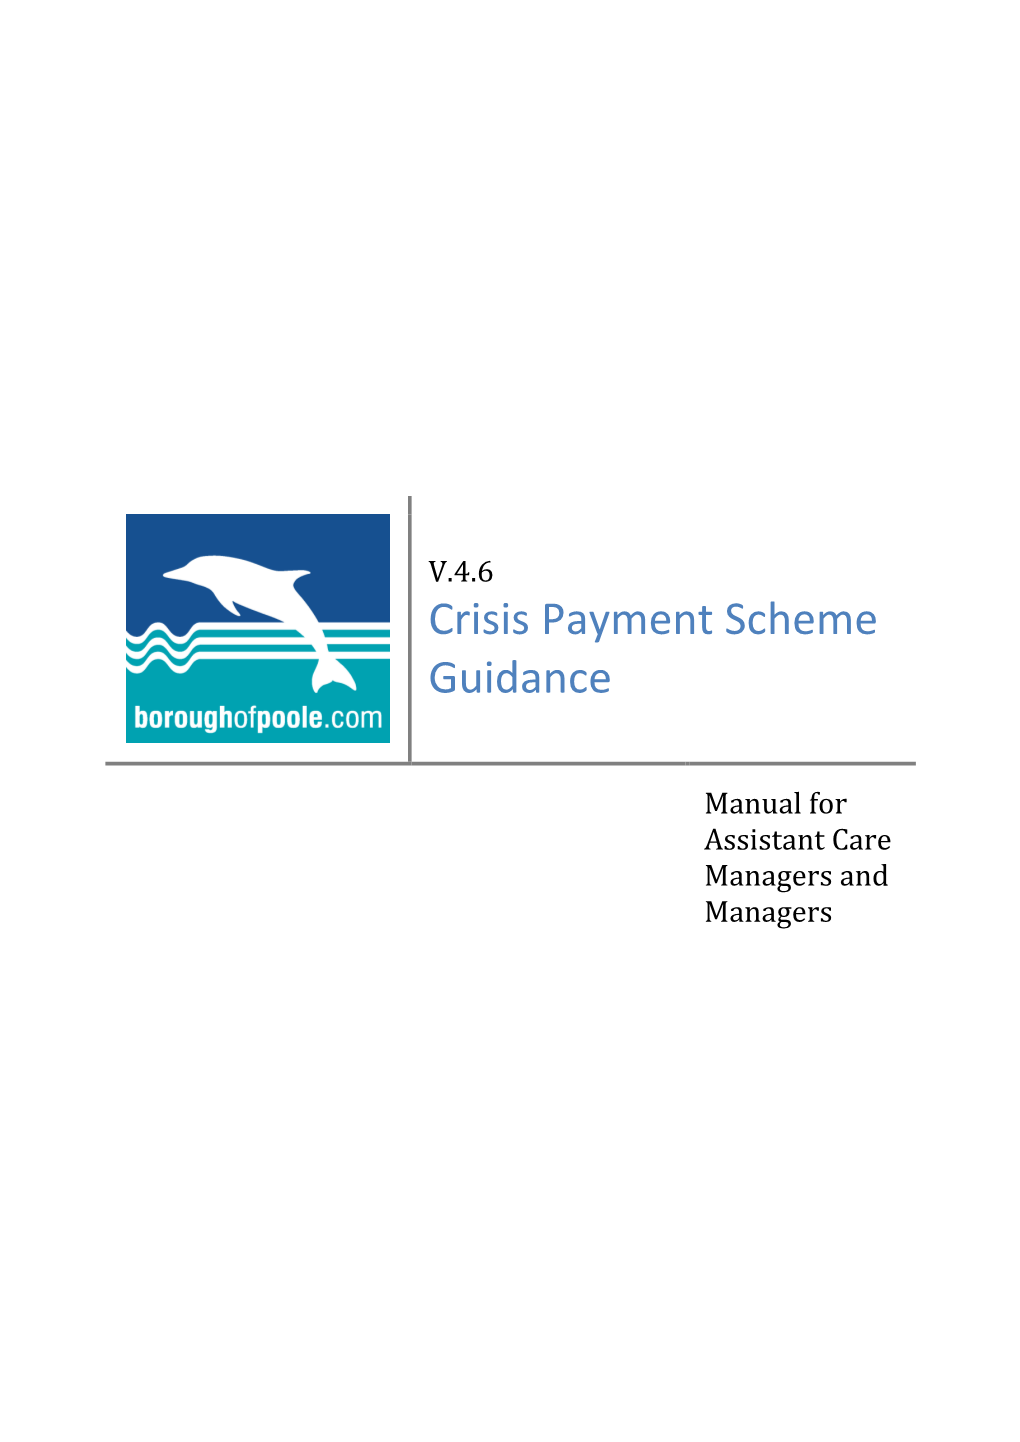 Crisis Payment Scheme Guidance